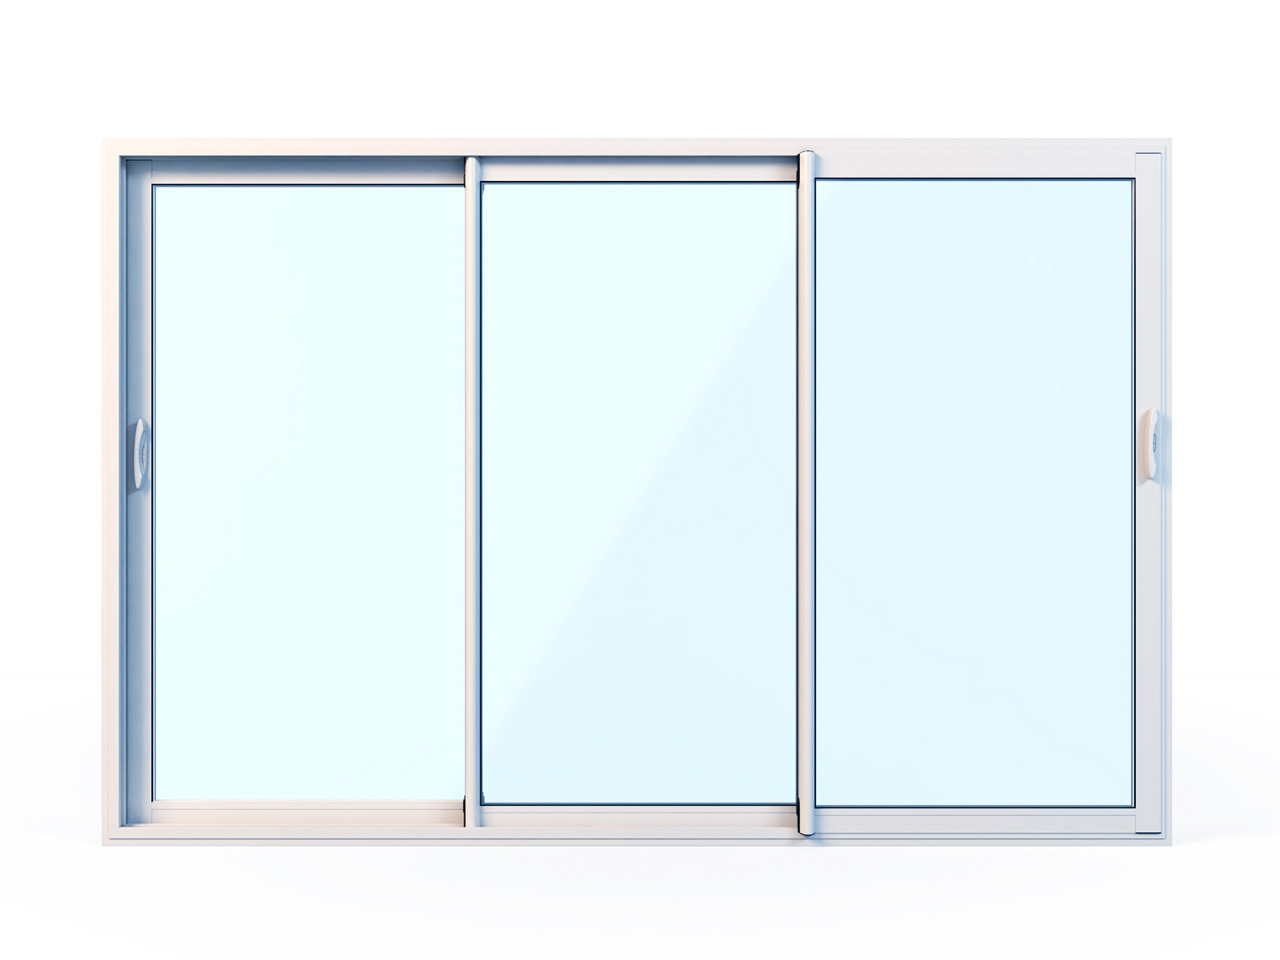 Schiebefenster, 780x240mm, getönt (80%), links, universell